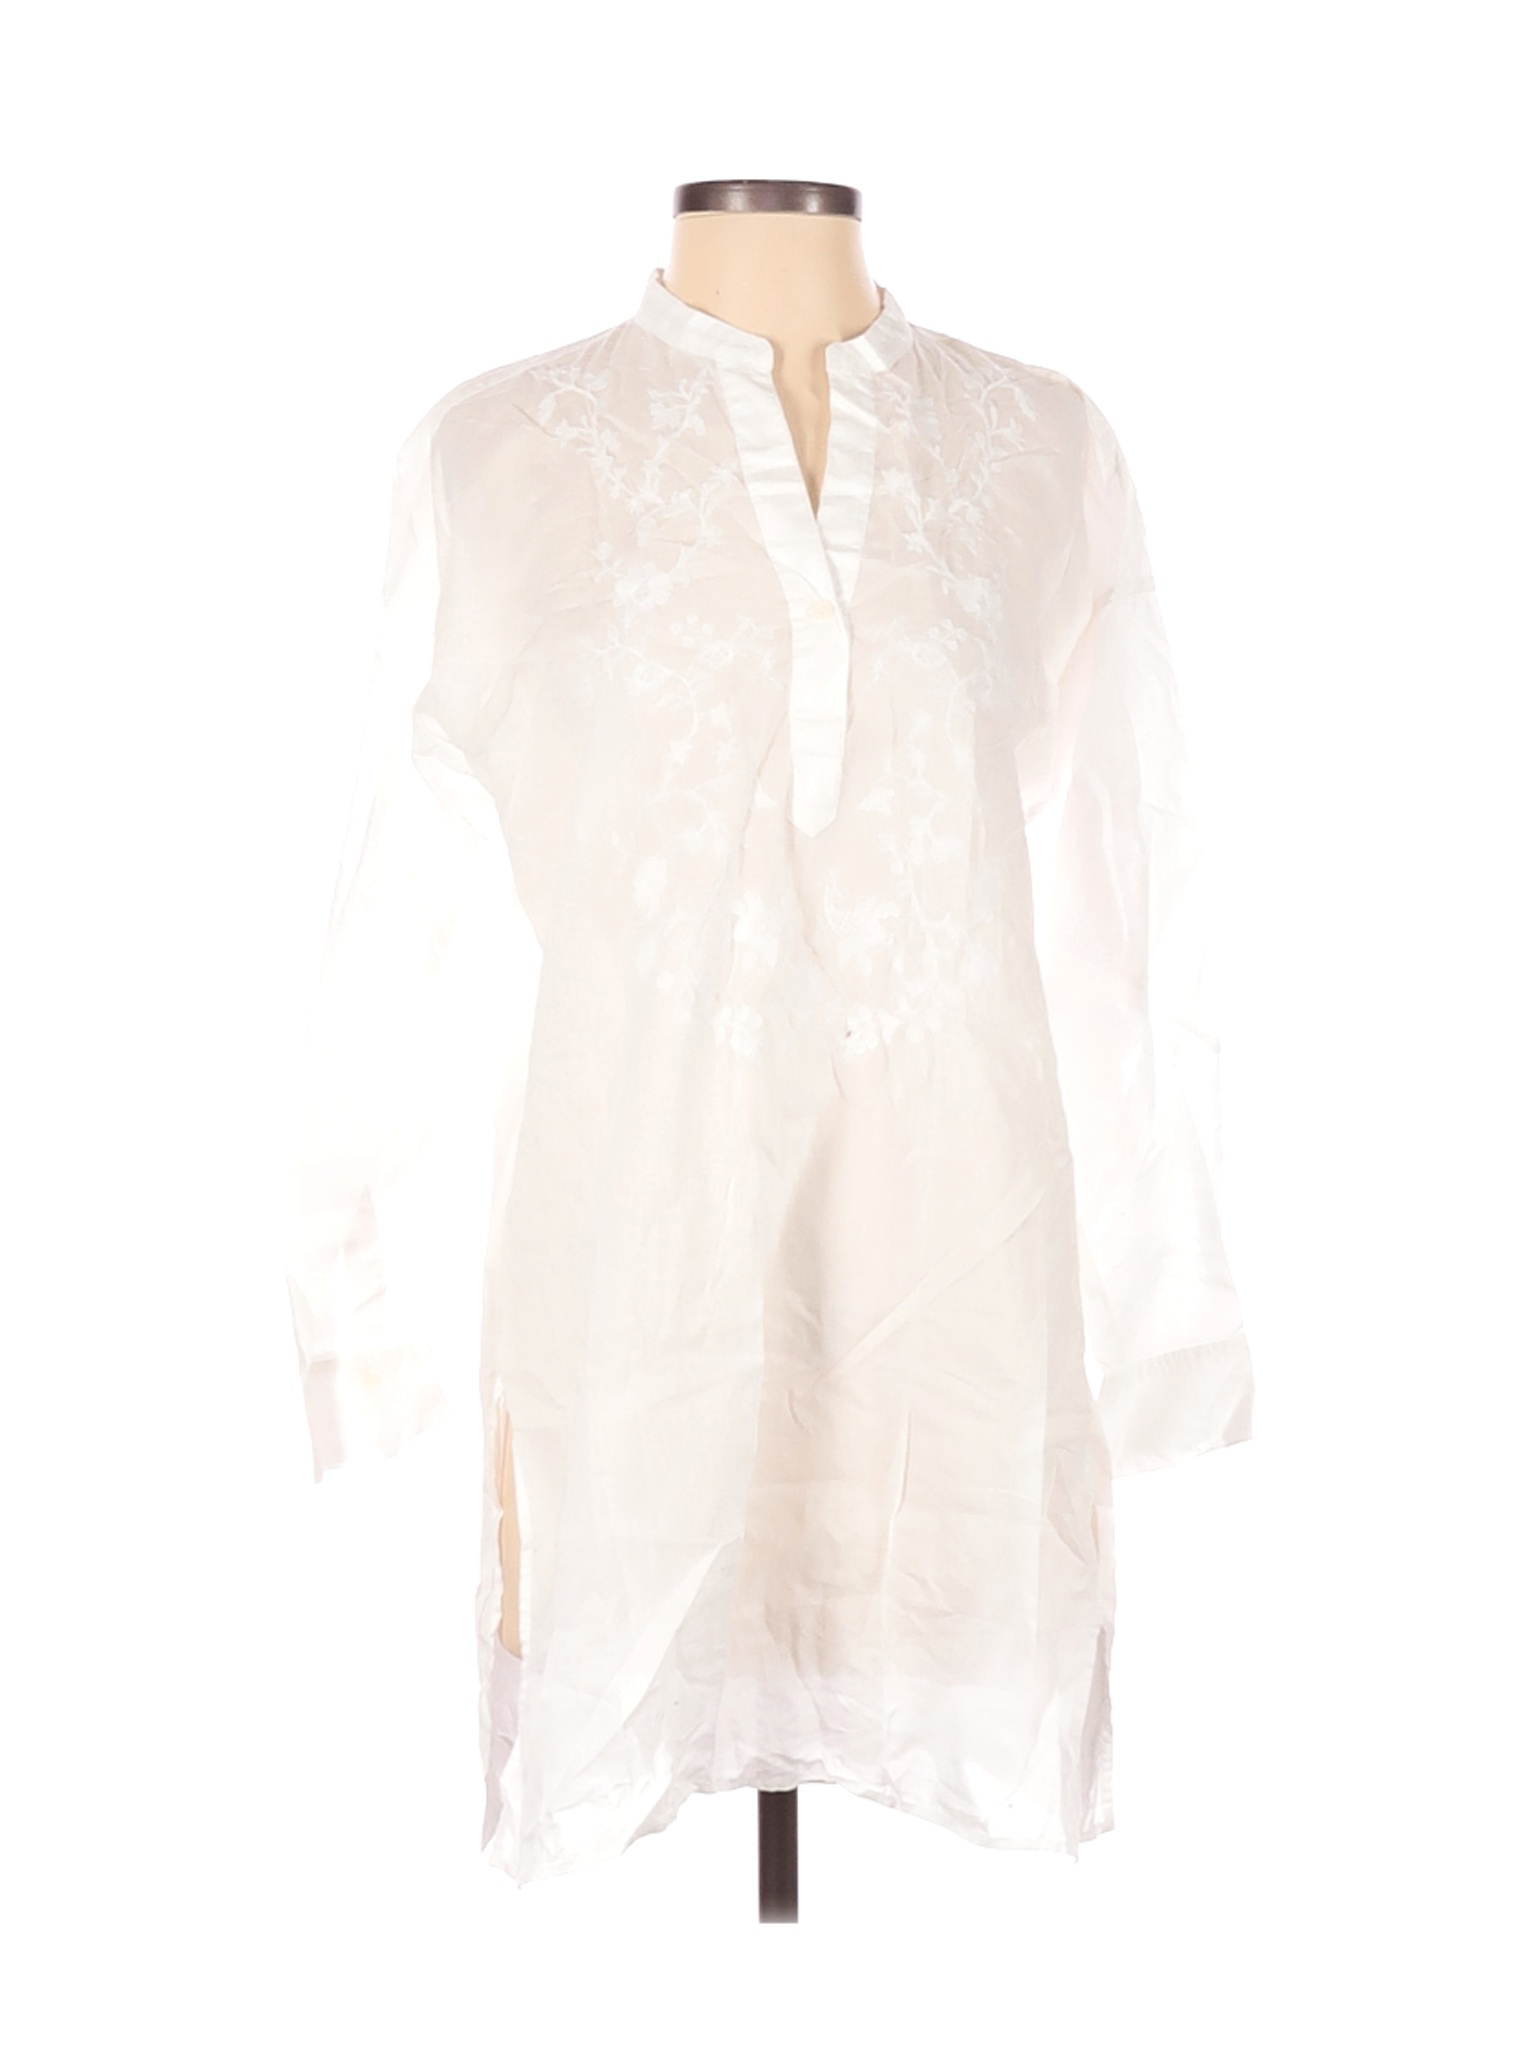 Uniqlo Women White Long Sleeve Blouse S | eBay